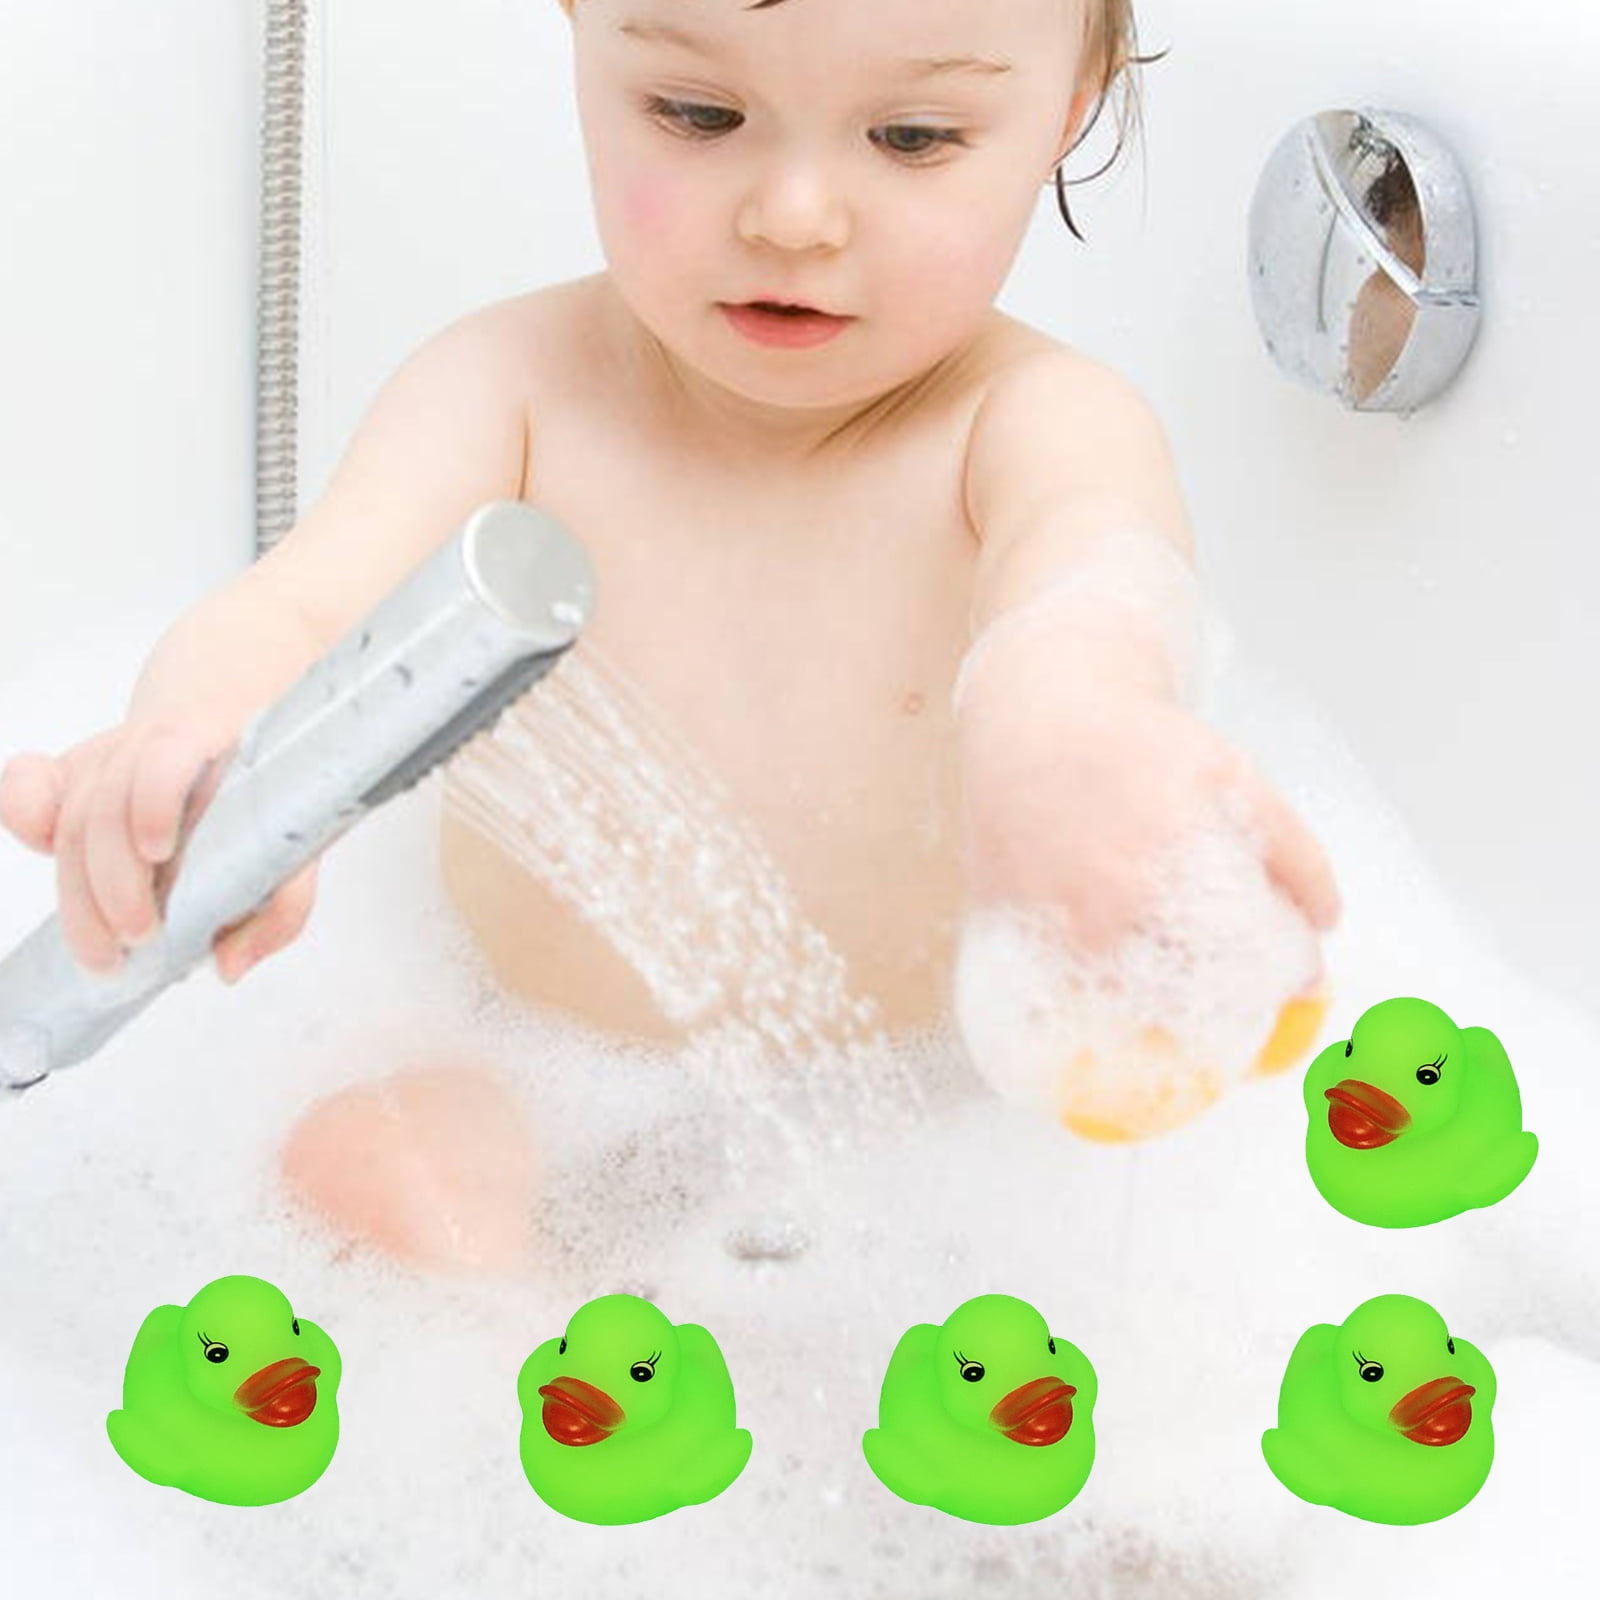 JA-RU Giant Glitter Rubber Ducks (4 Rubber Duckies Assorted) Baby Bath Toys  & Pool Beach Essentials. Stress Relief Sensory Play Fidget Toy. Bulk